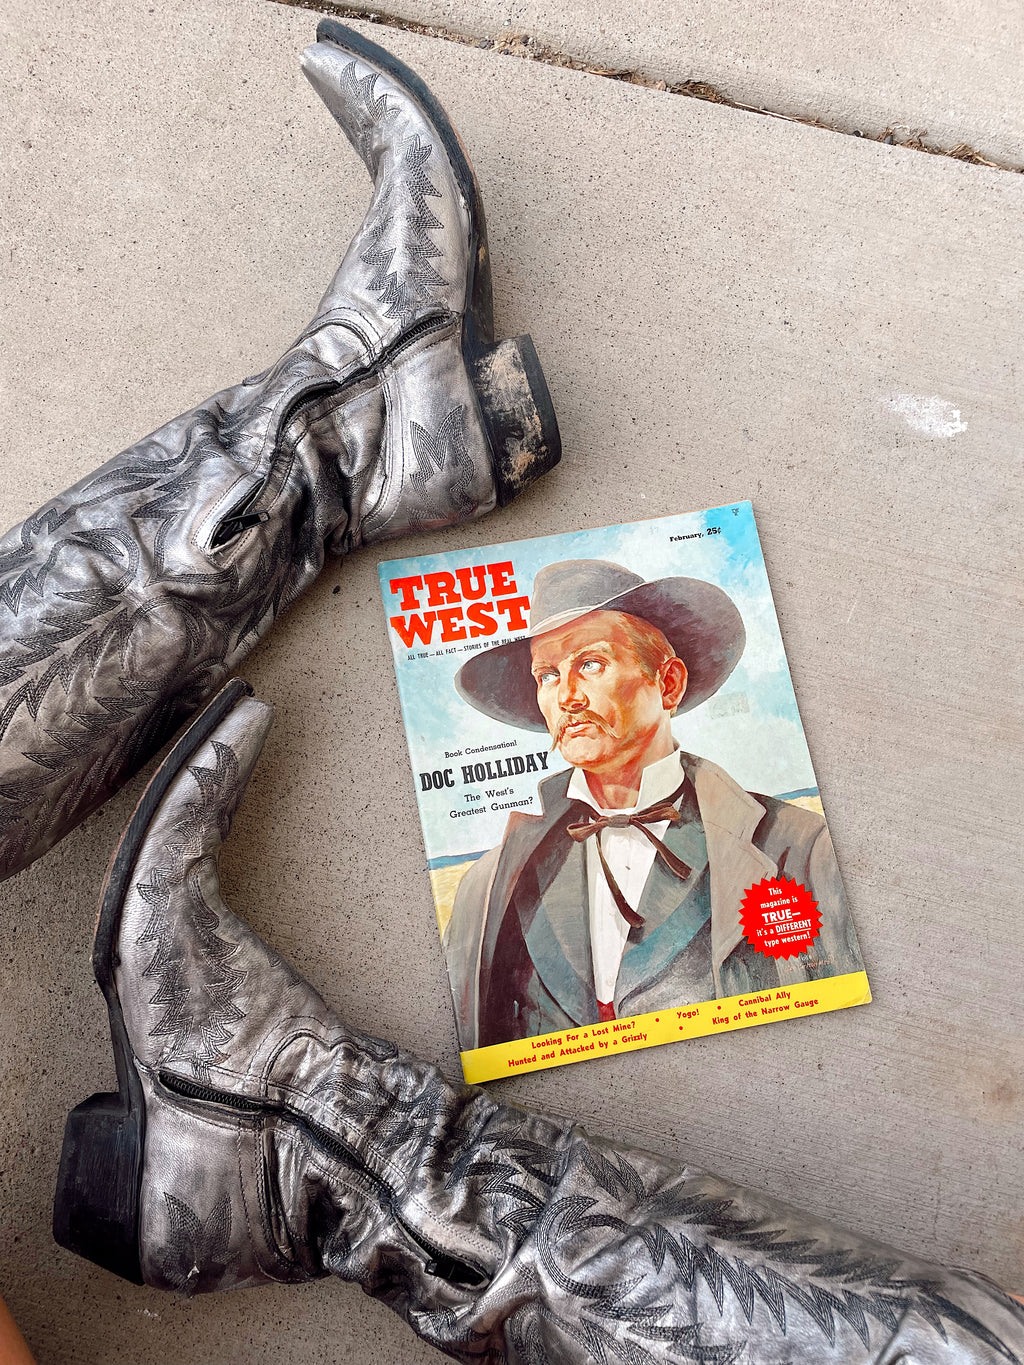 Doc Holliday True West Magazine